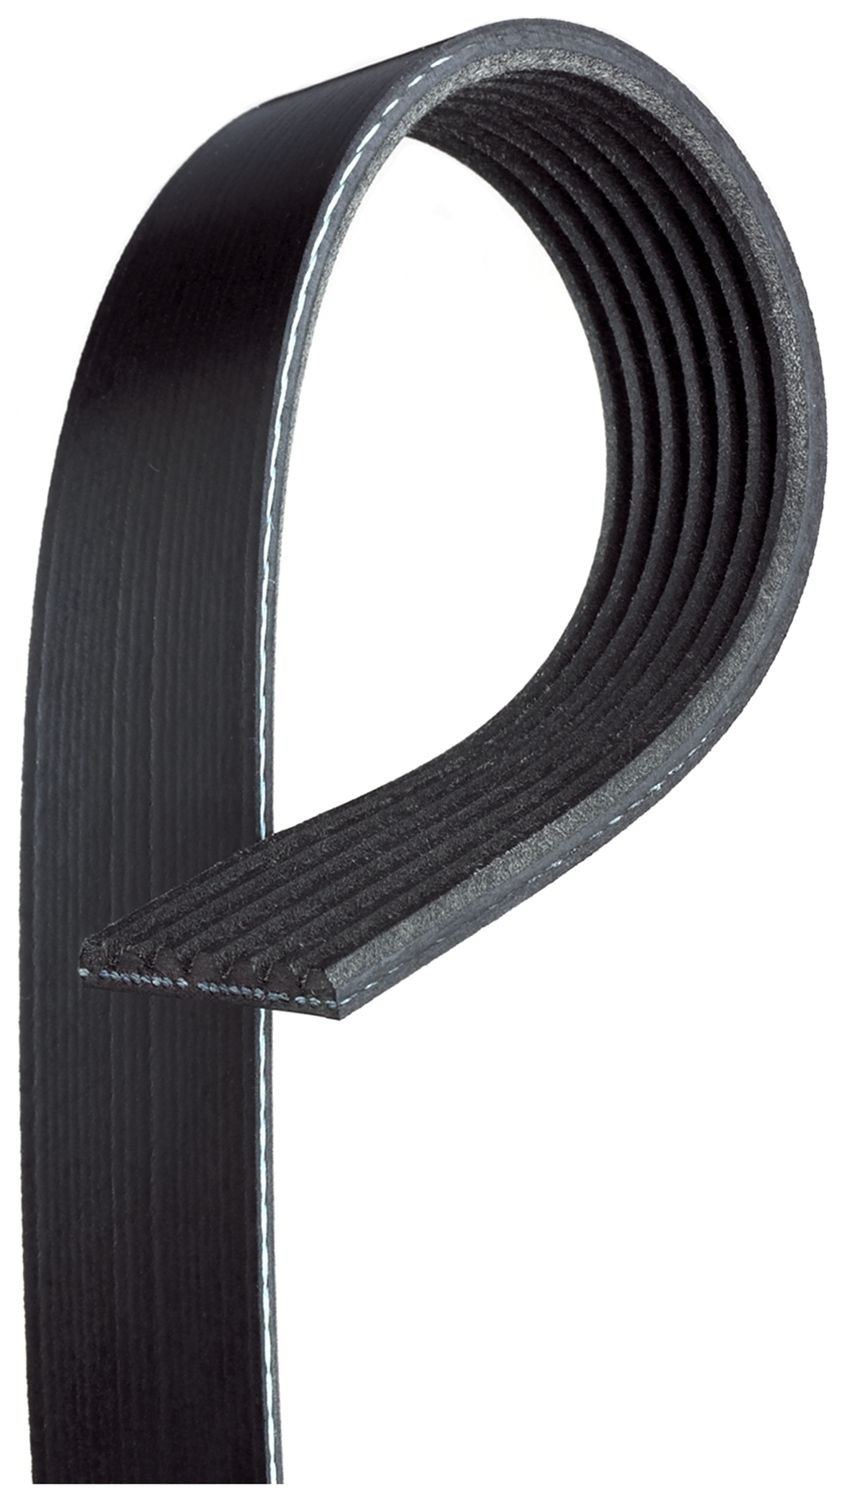 GATES 7PK2053 Serpentine belt 2053mm, 7, G-Force™ C12™ CVT Belt